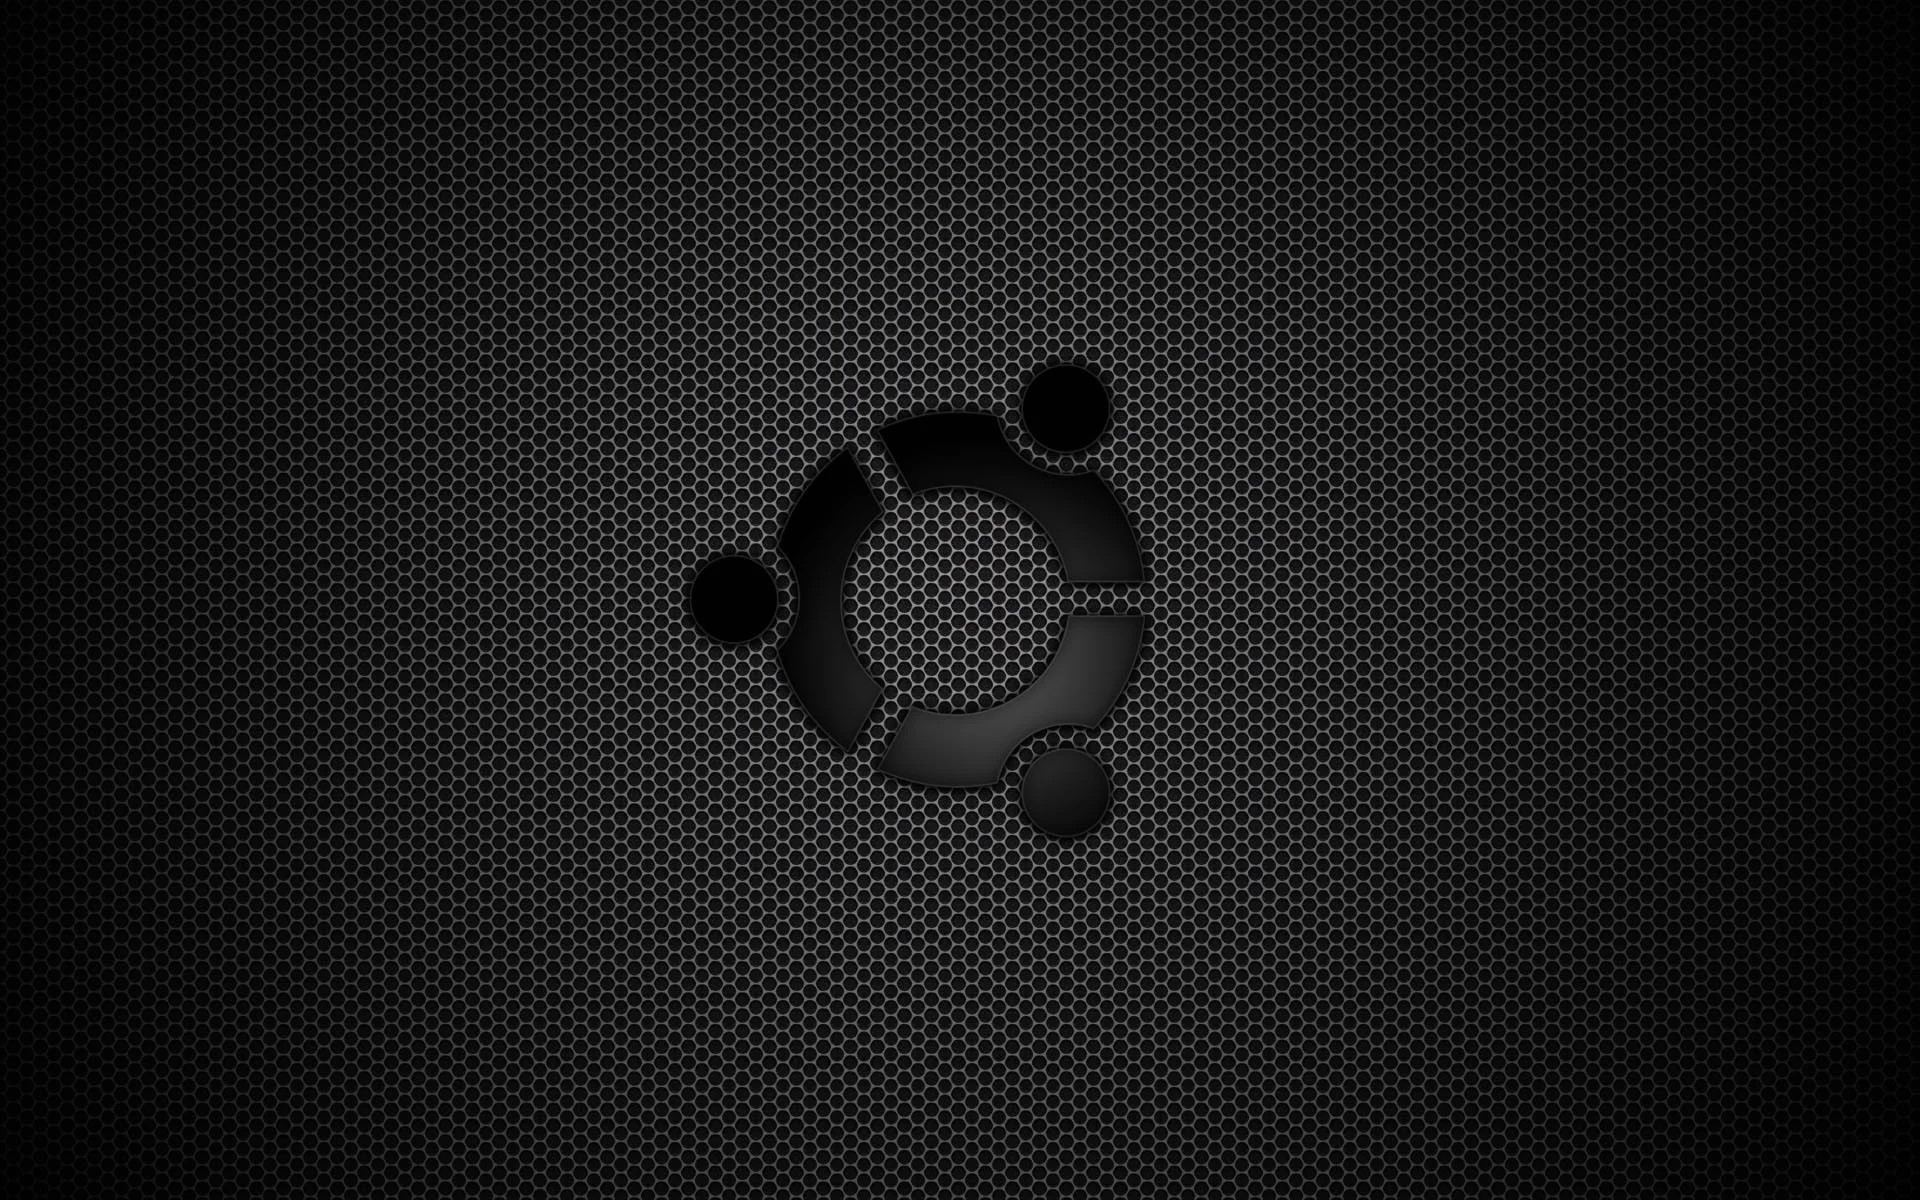 Ubuntu Hd Wallpapers | Wallpapers Catalog | Pinterest | Wallpaper and Linux